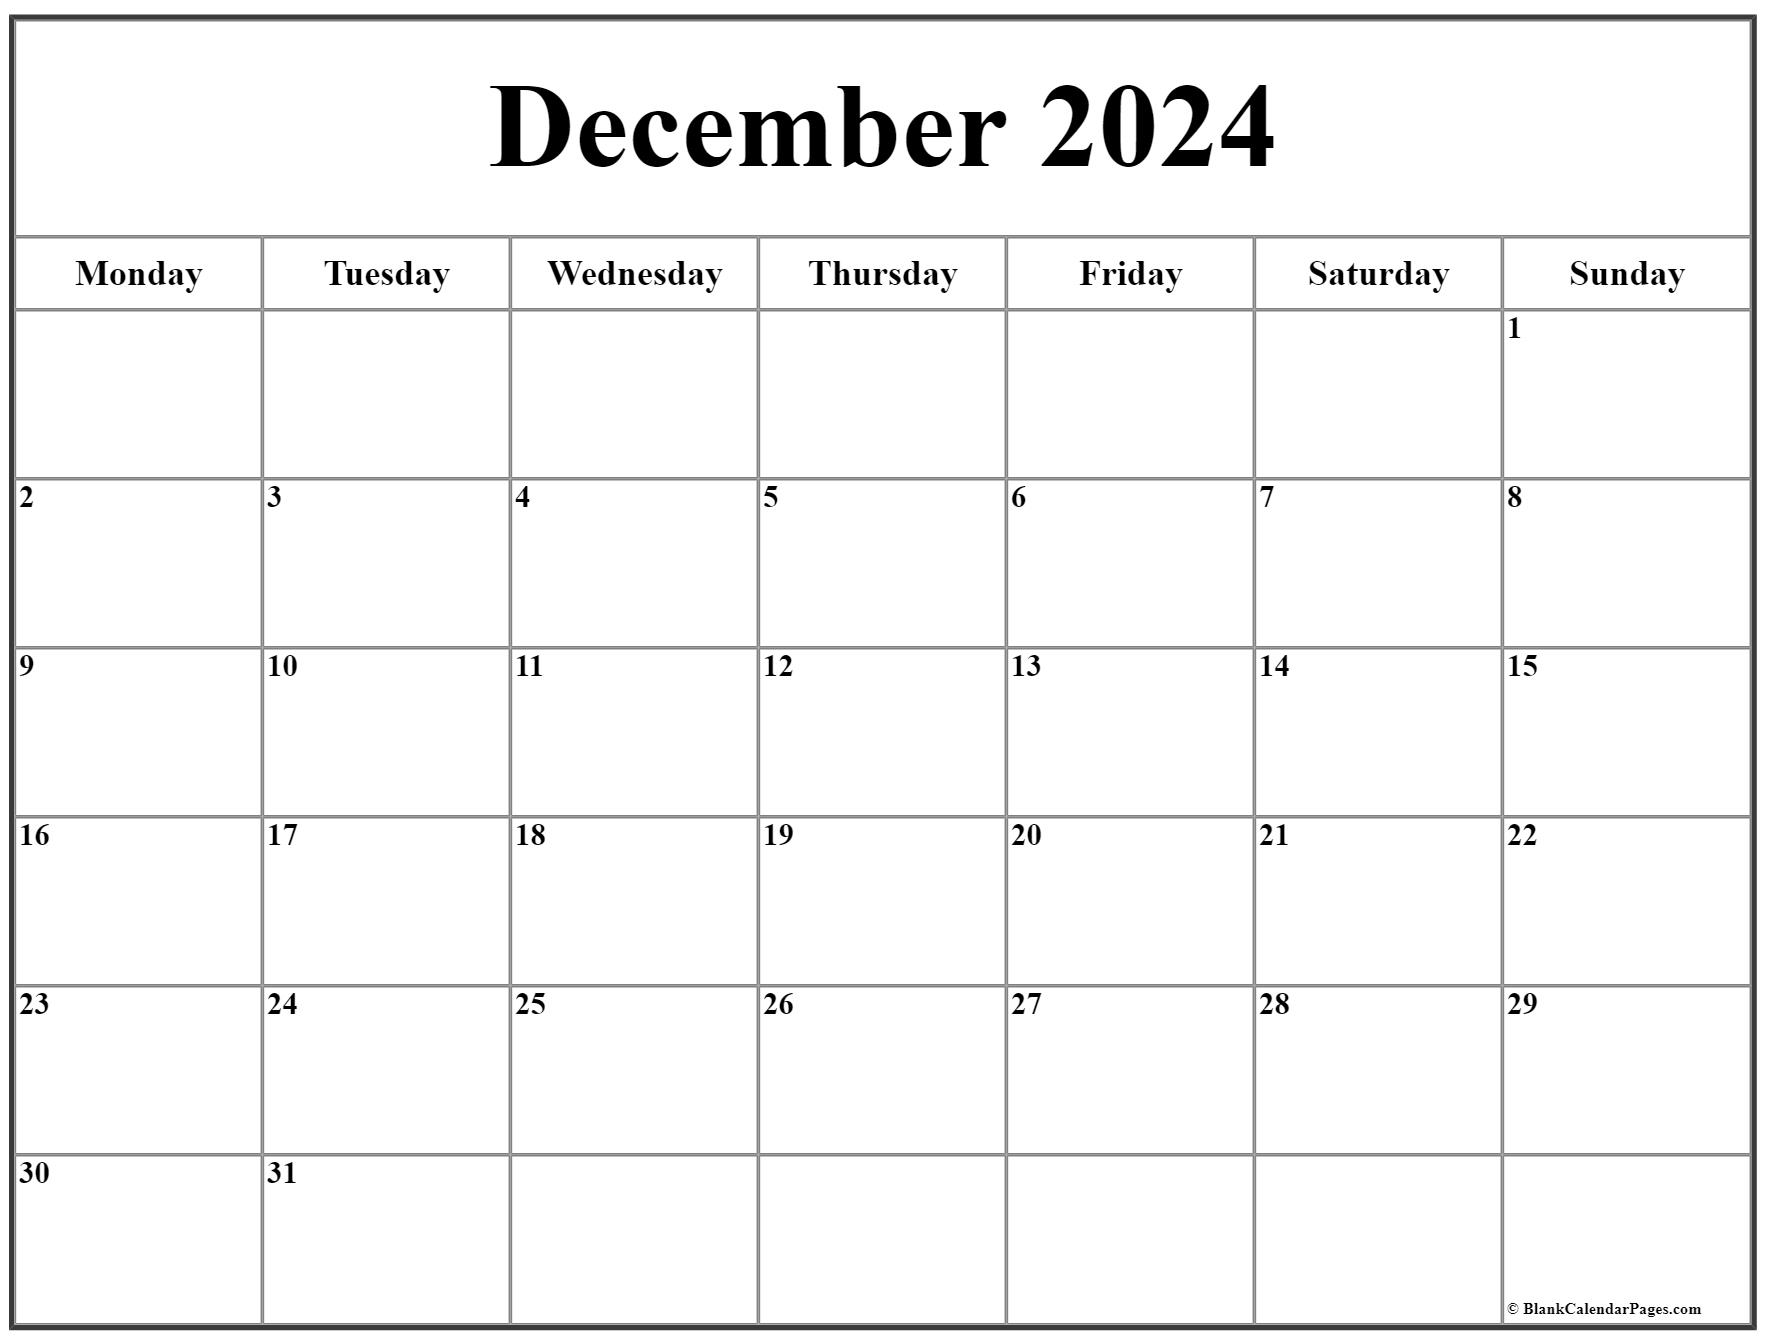 December 2020 Monday Calendar | Monday to Sunday